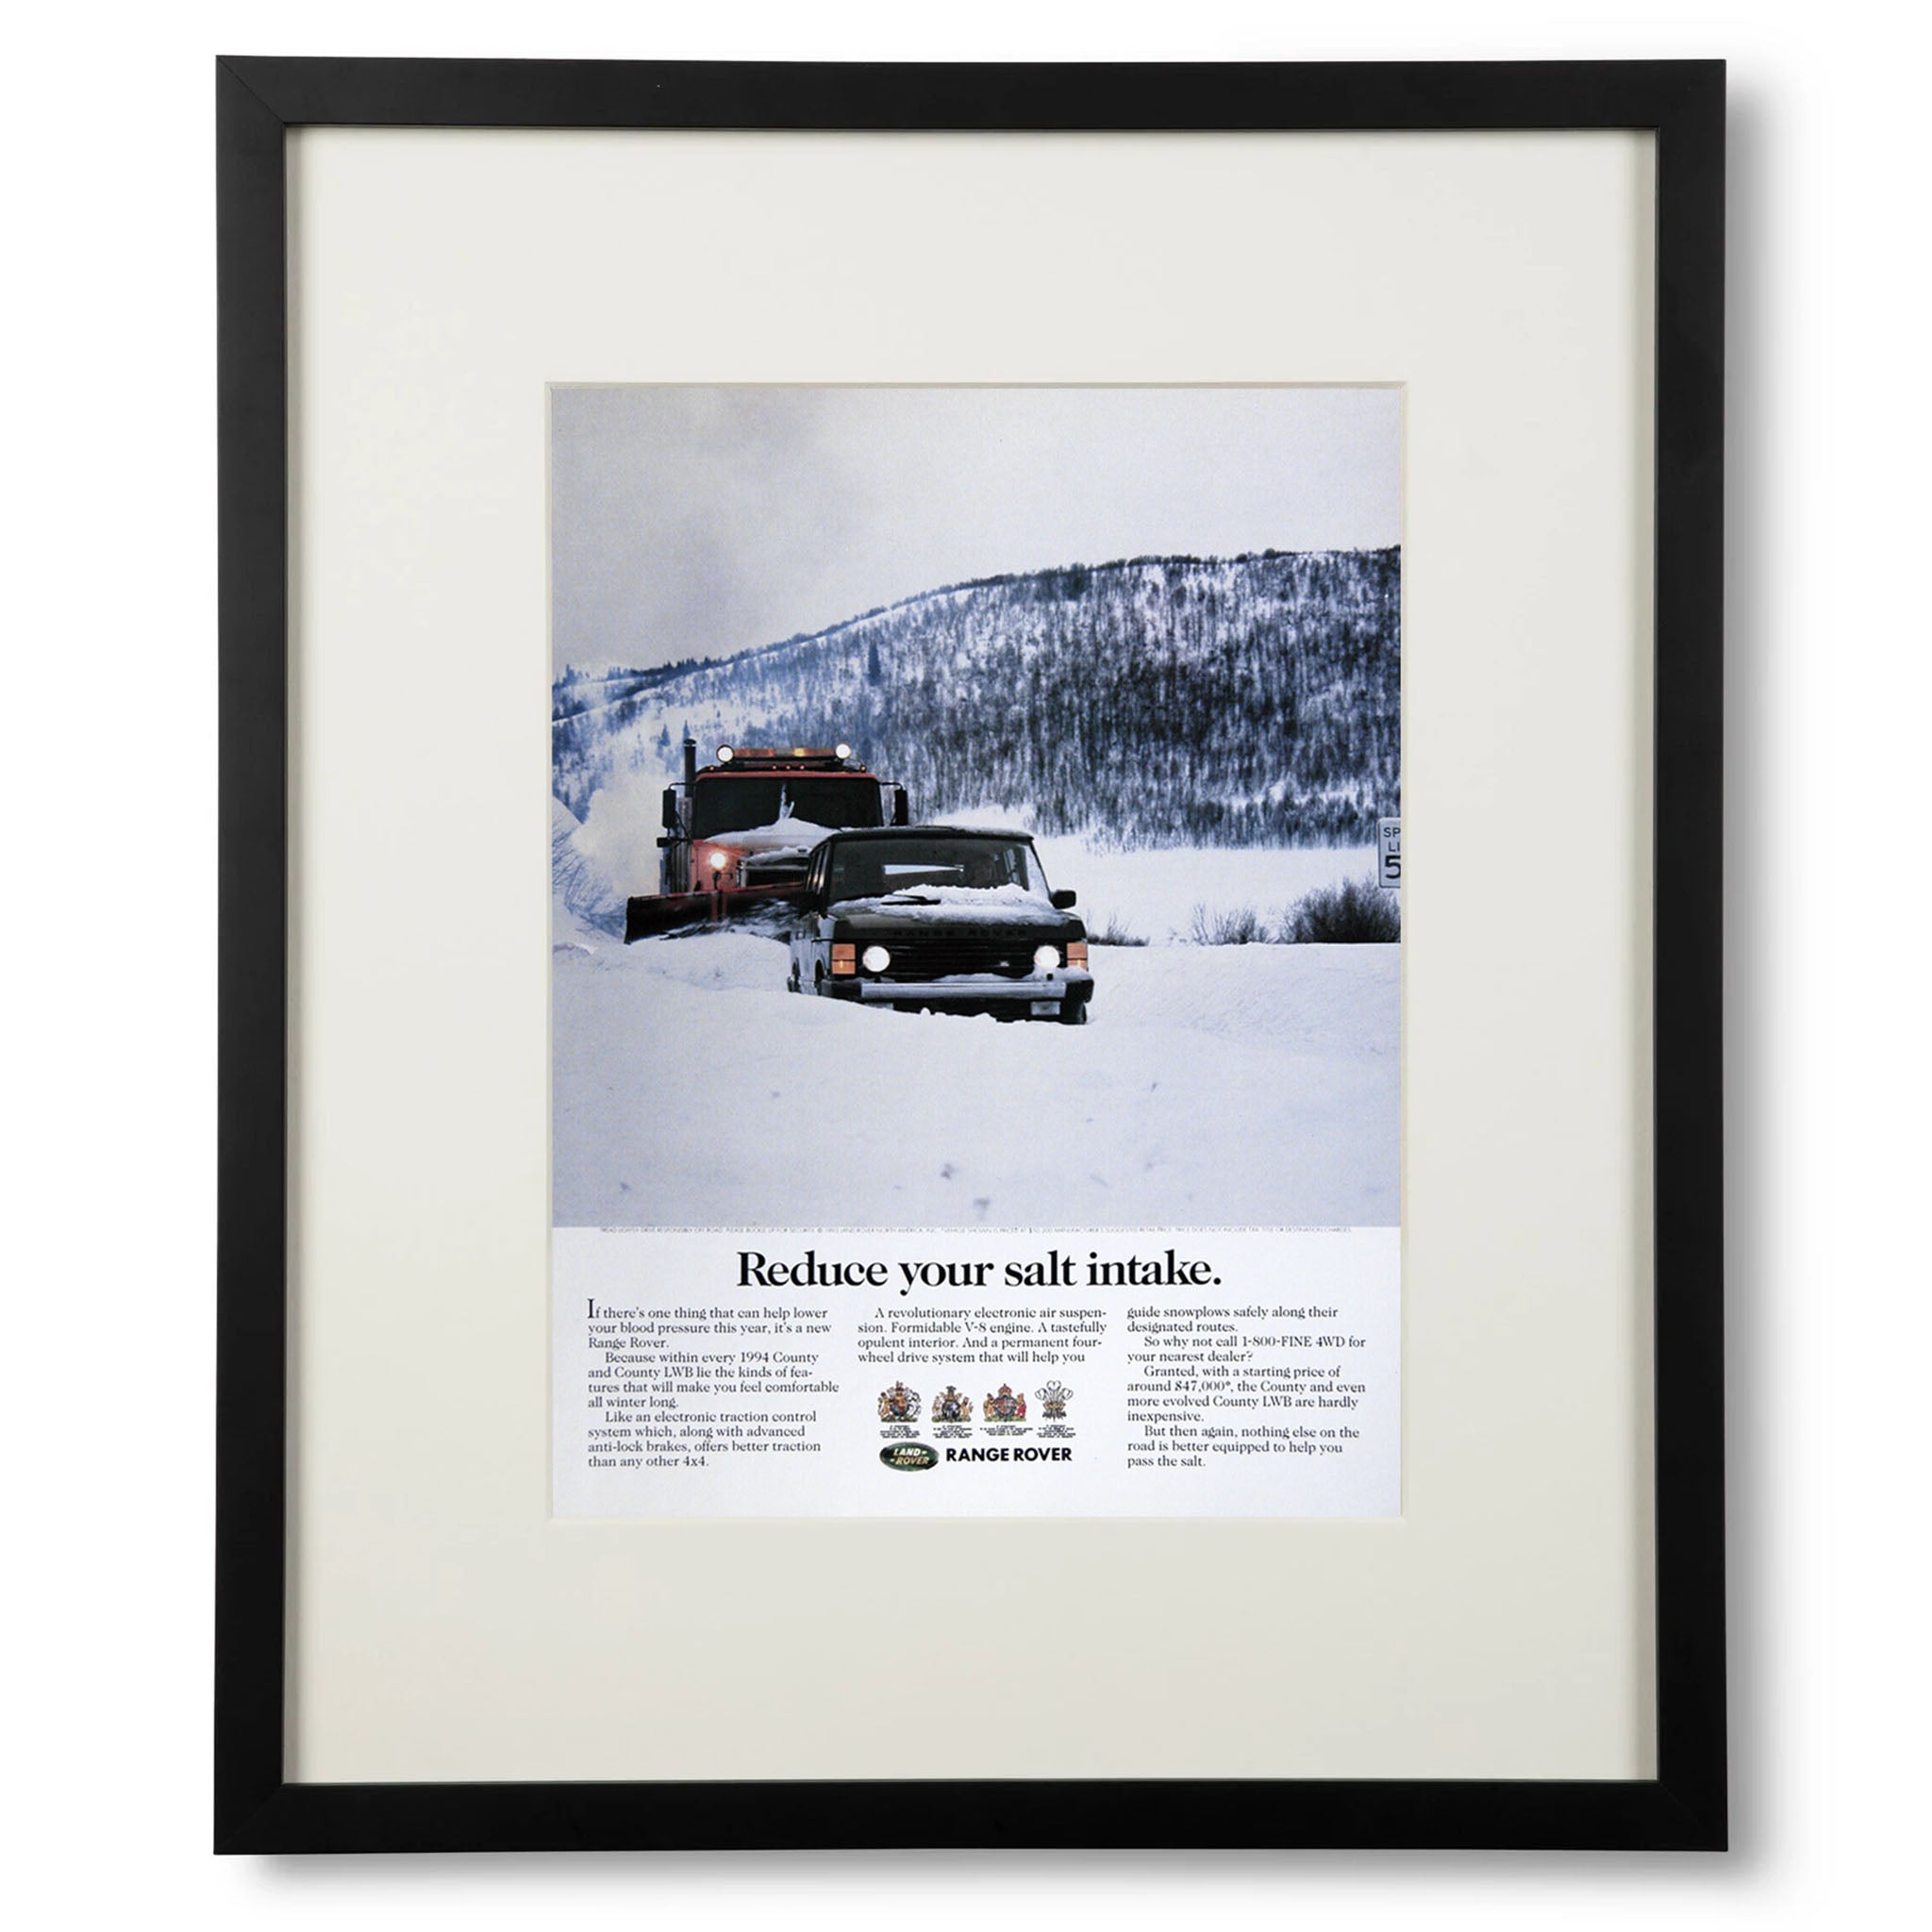 Framed Range Rover Reduce Your Salt Intake Advertisement